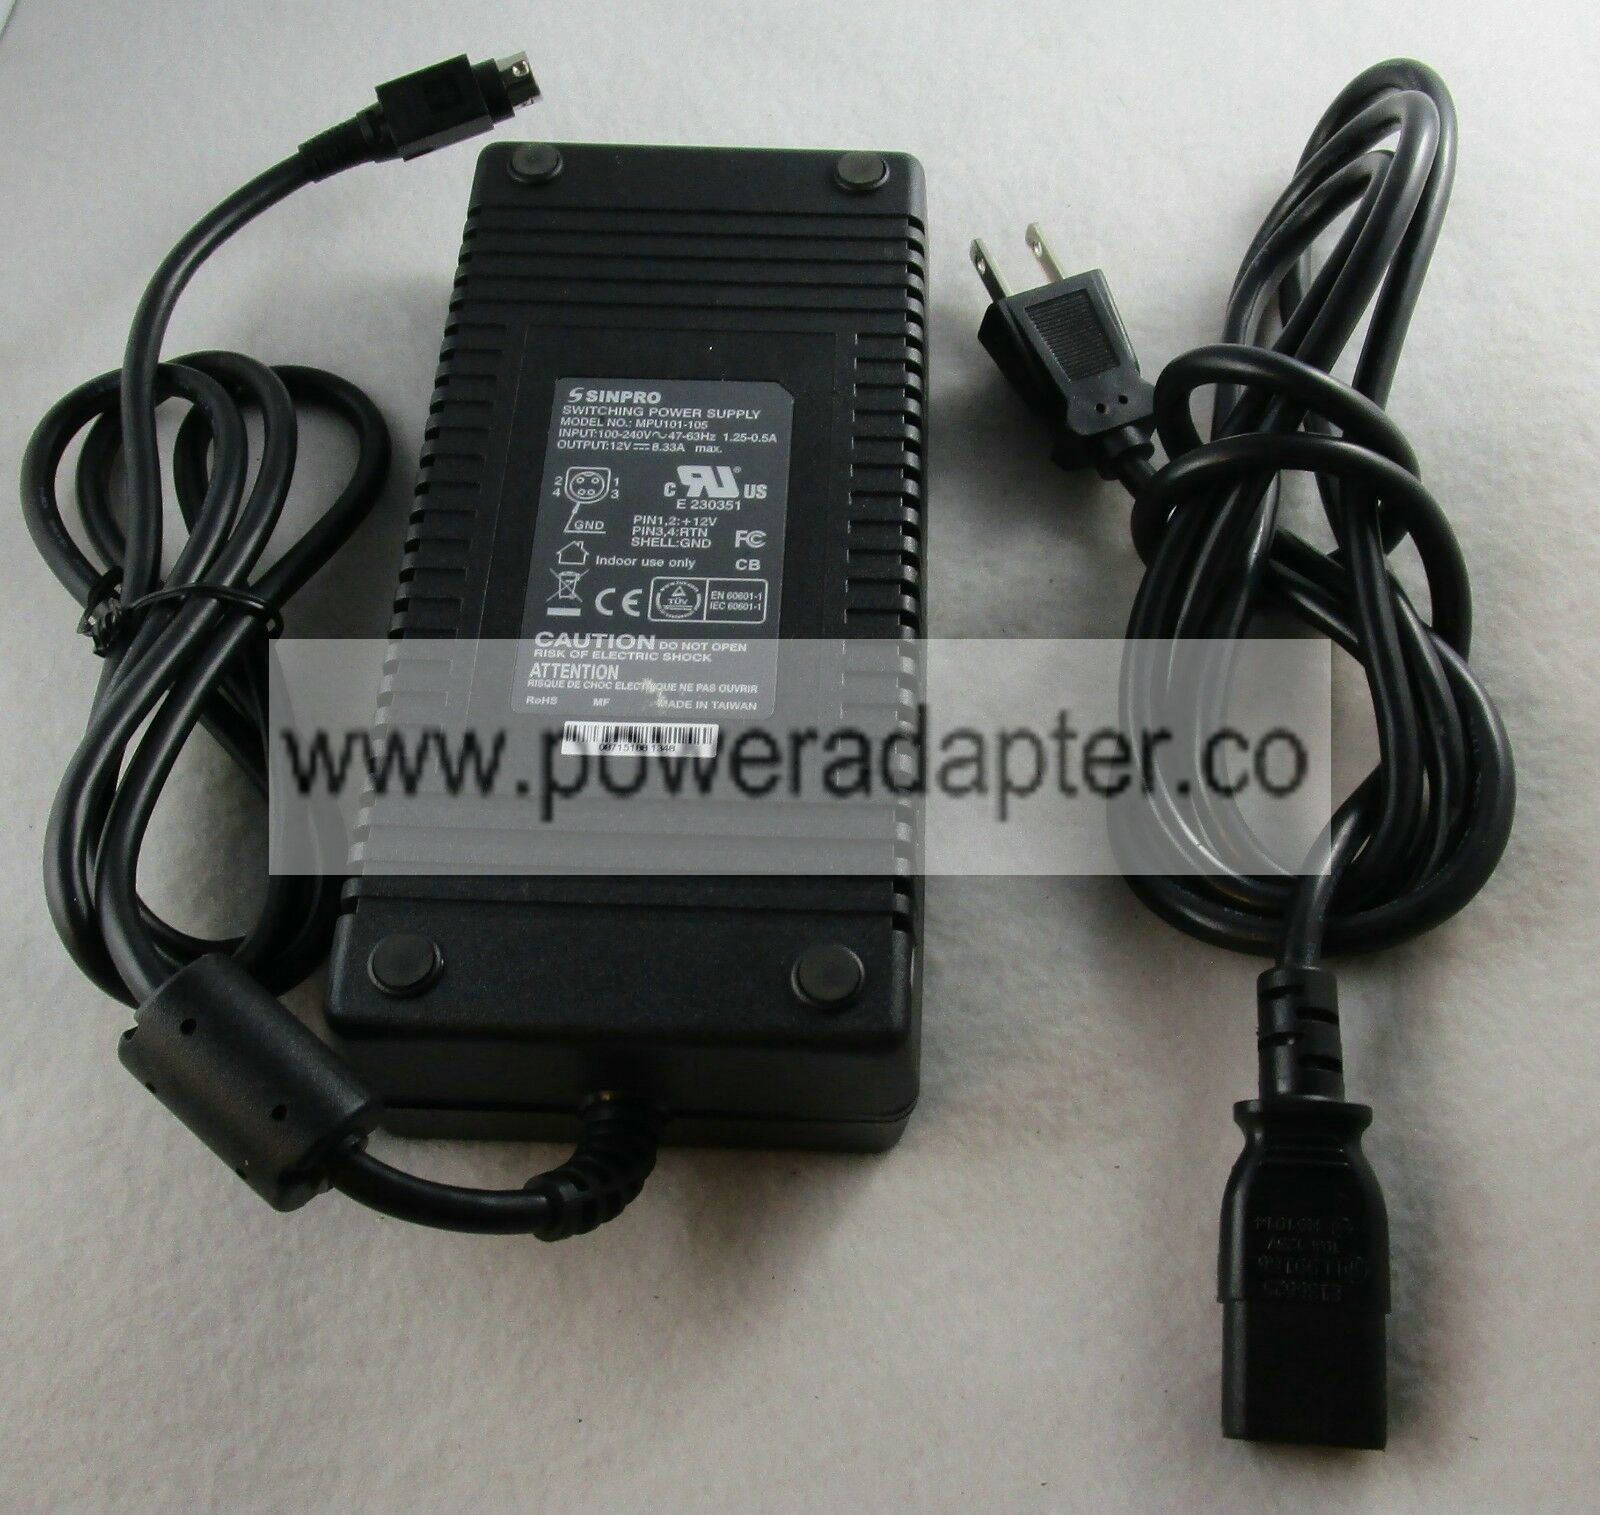 Sinpro 12v 100w Medical Power AC Adapter MPU101-105